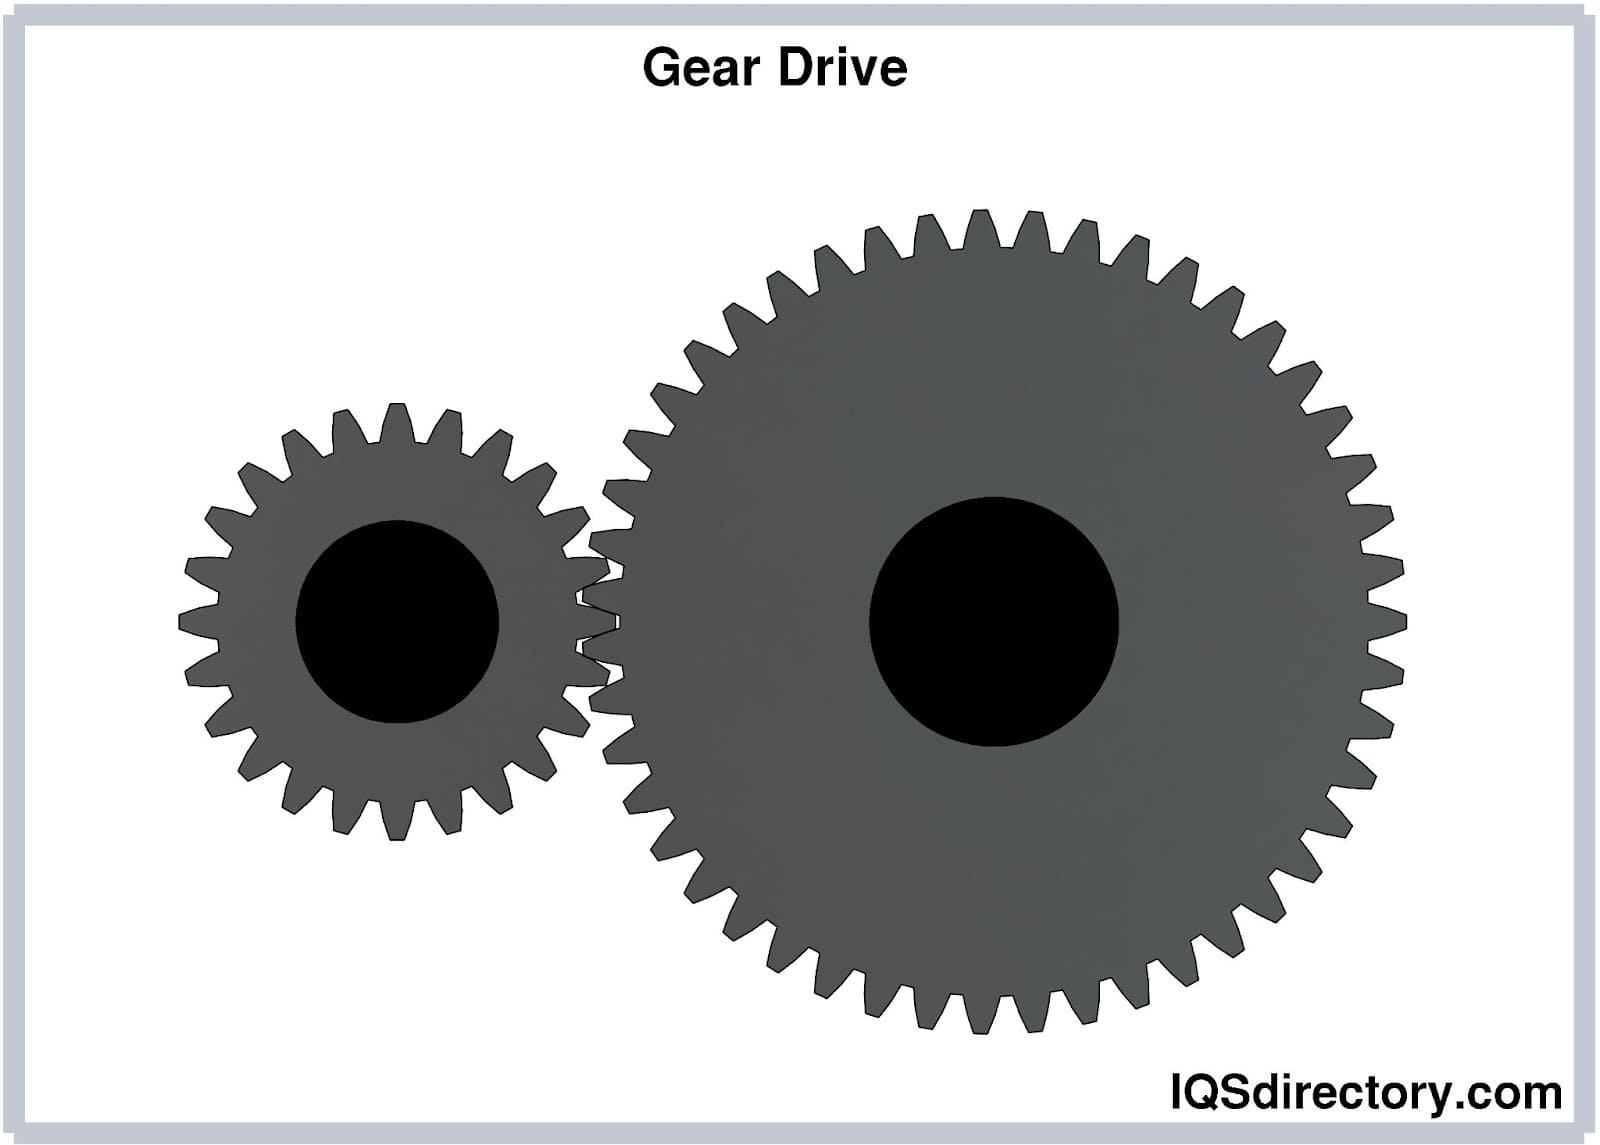 Gear Drive